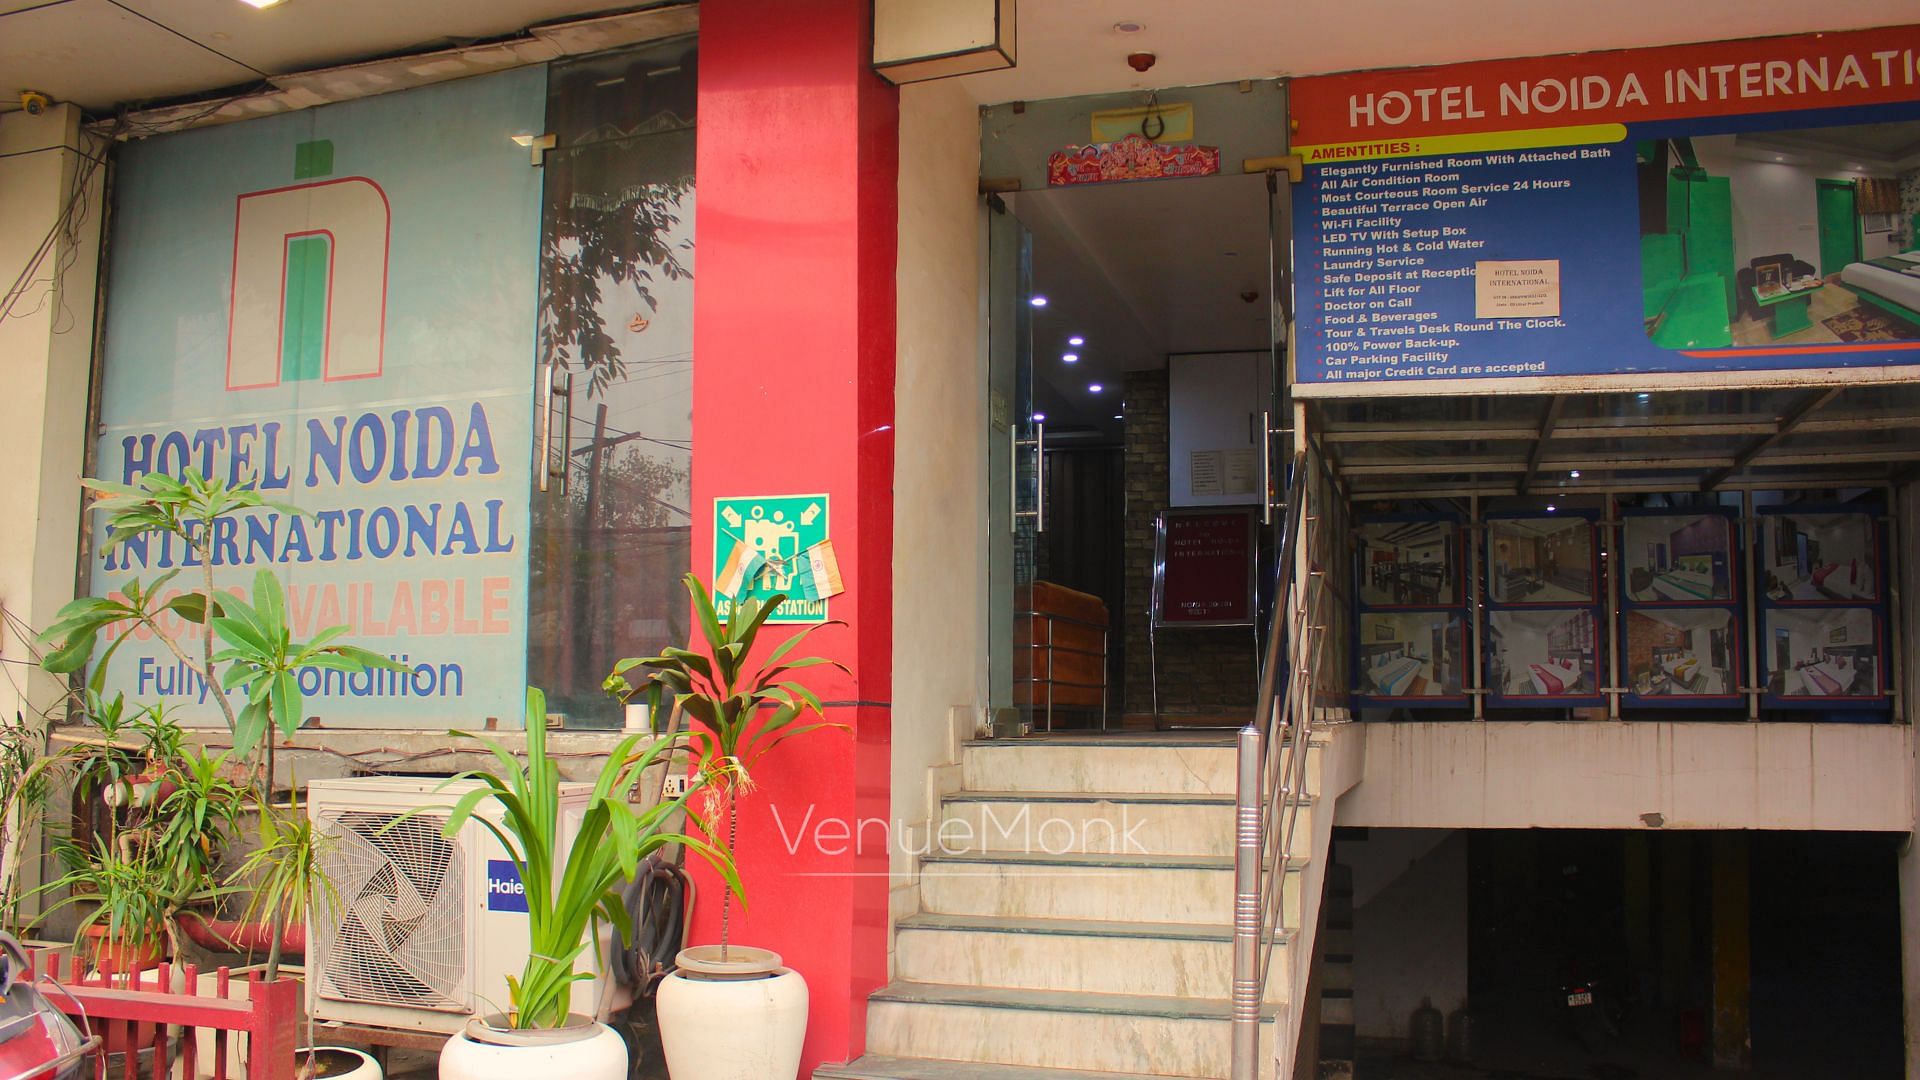 Hotel Noida International in Sector 11, Noida